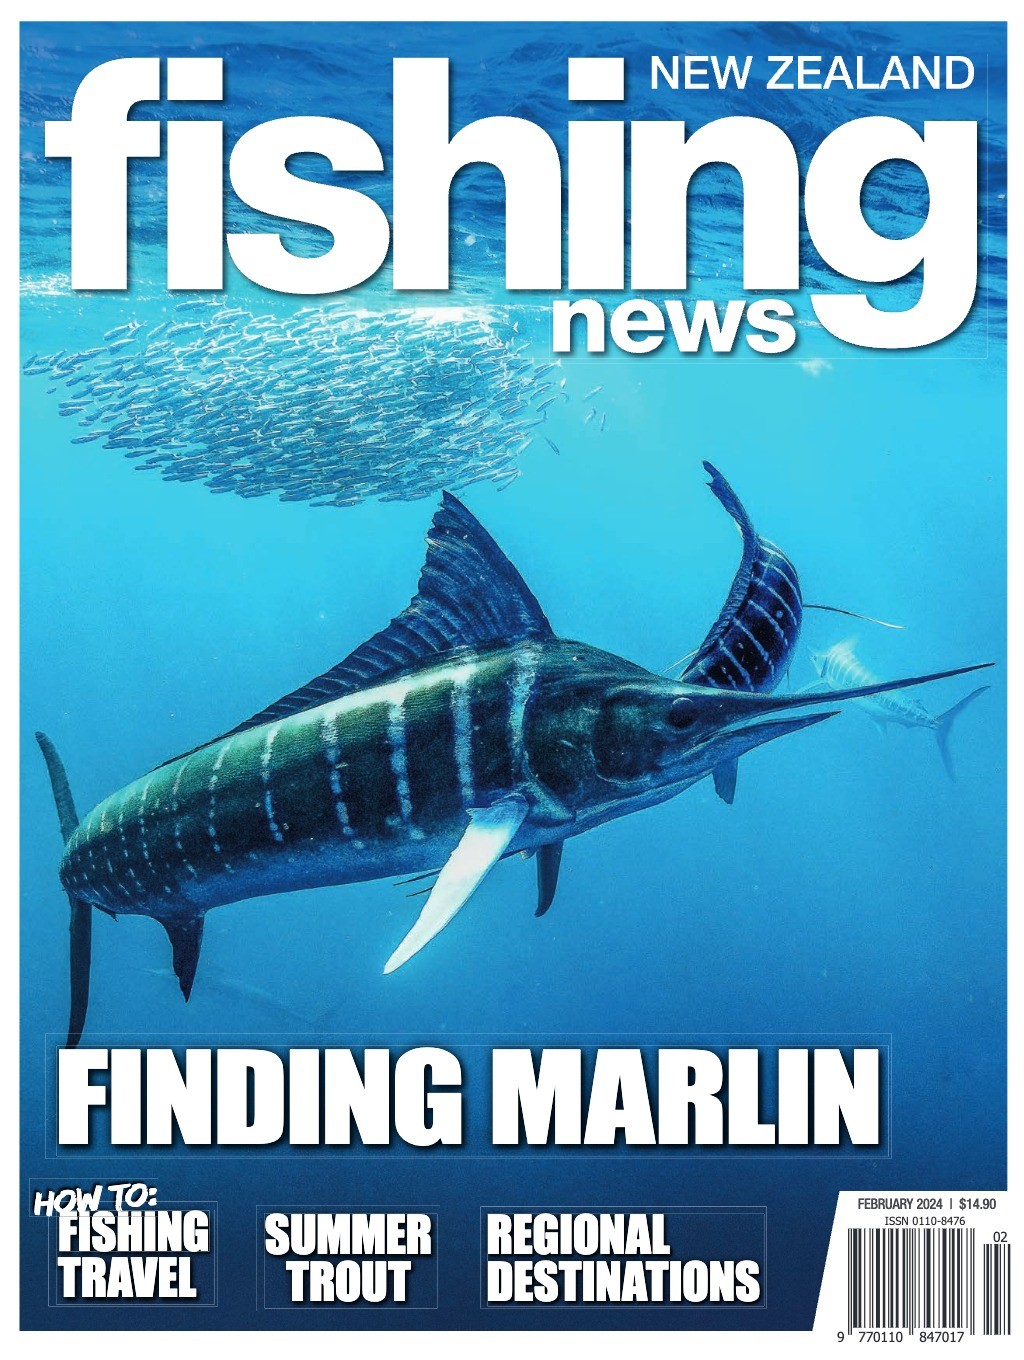 New Zealand Fishing News - Home